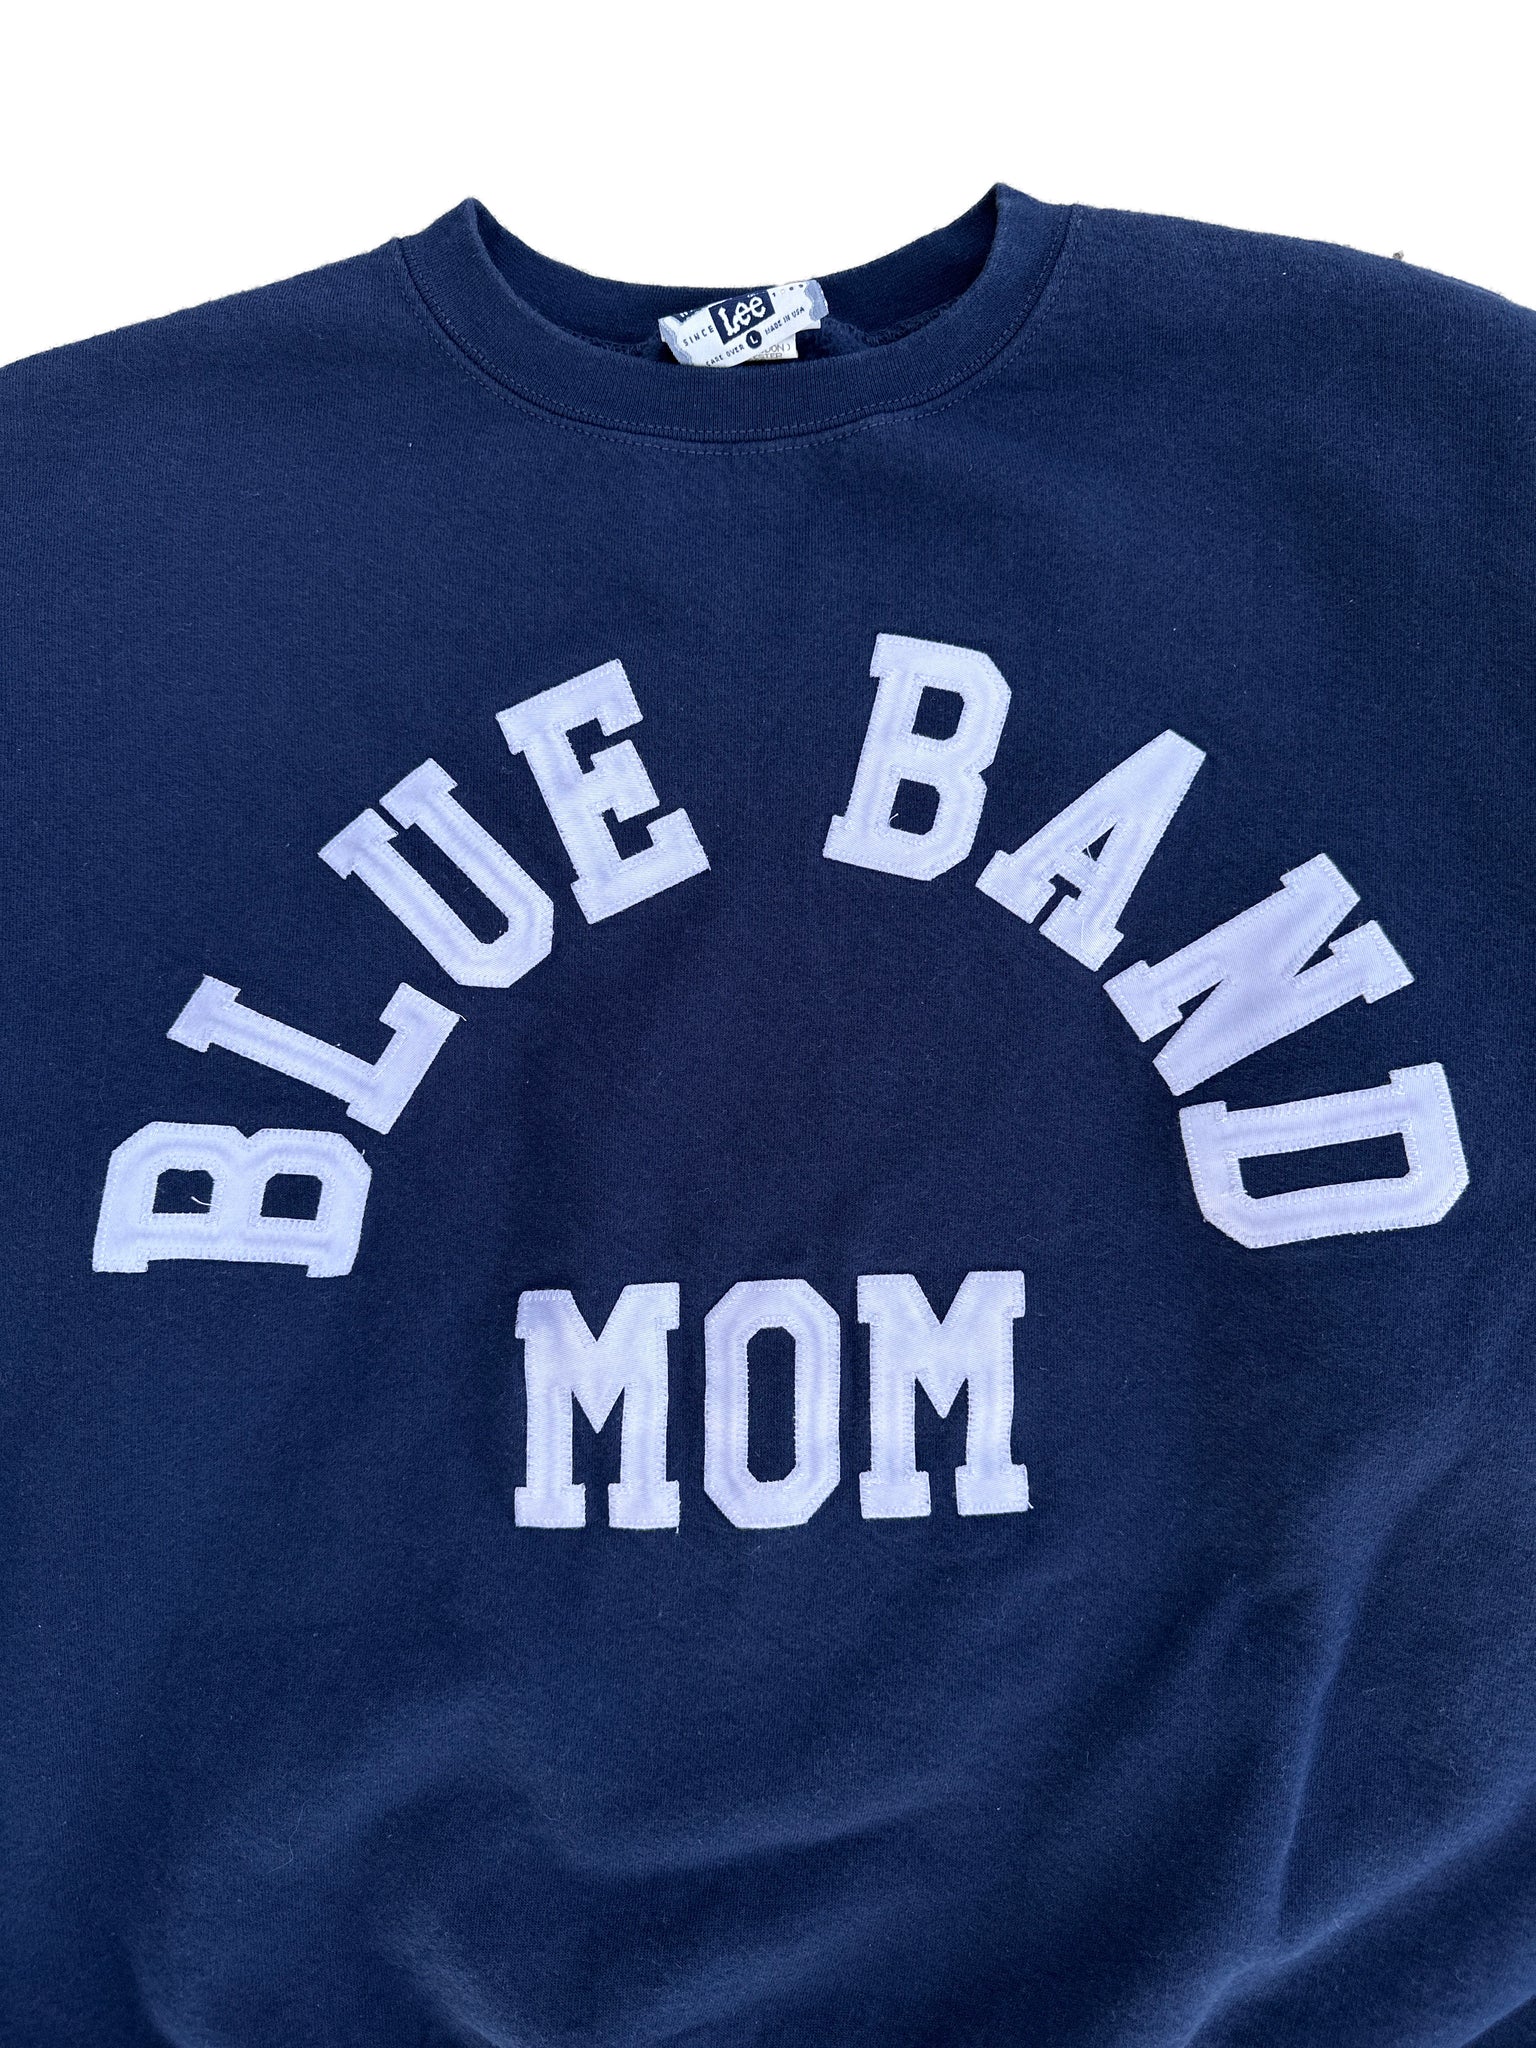 (L) vintage blue band crewneck